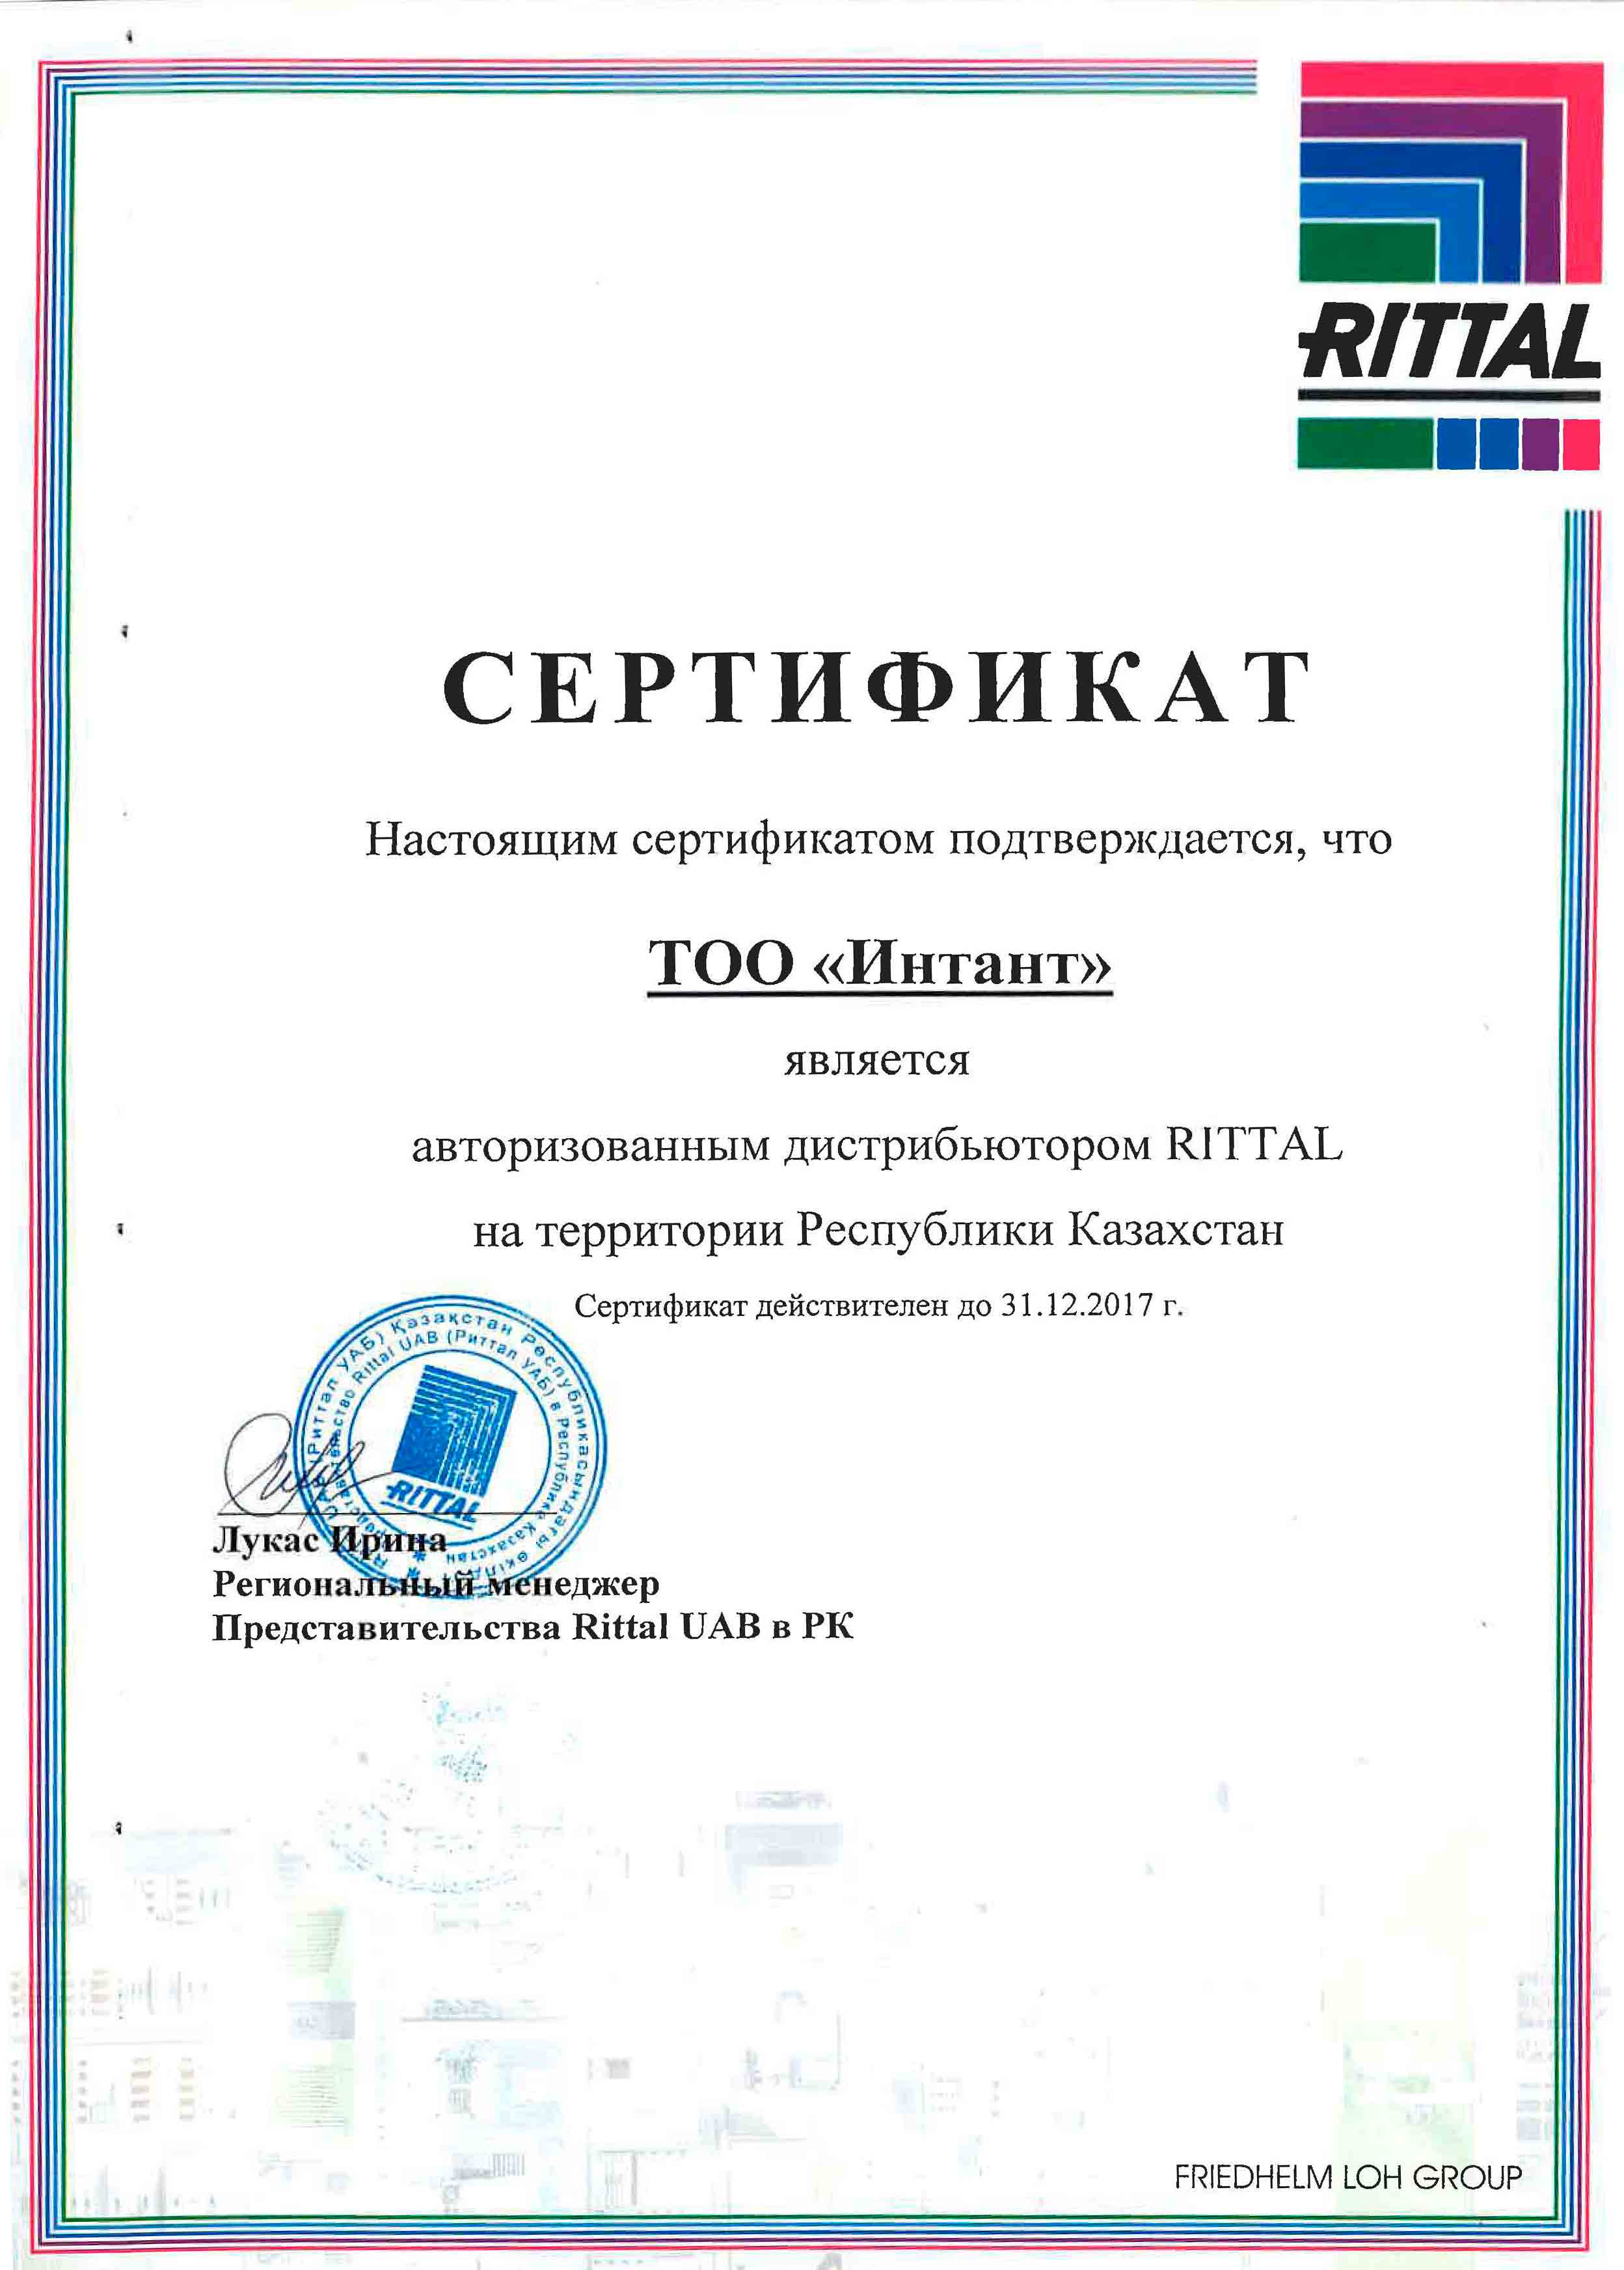 Сертификат RITTAL 2017